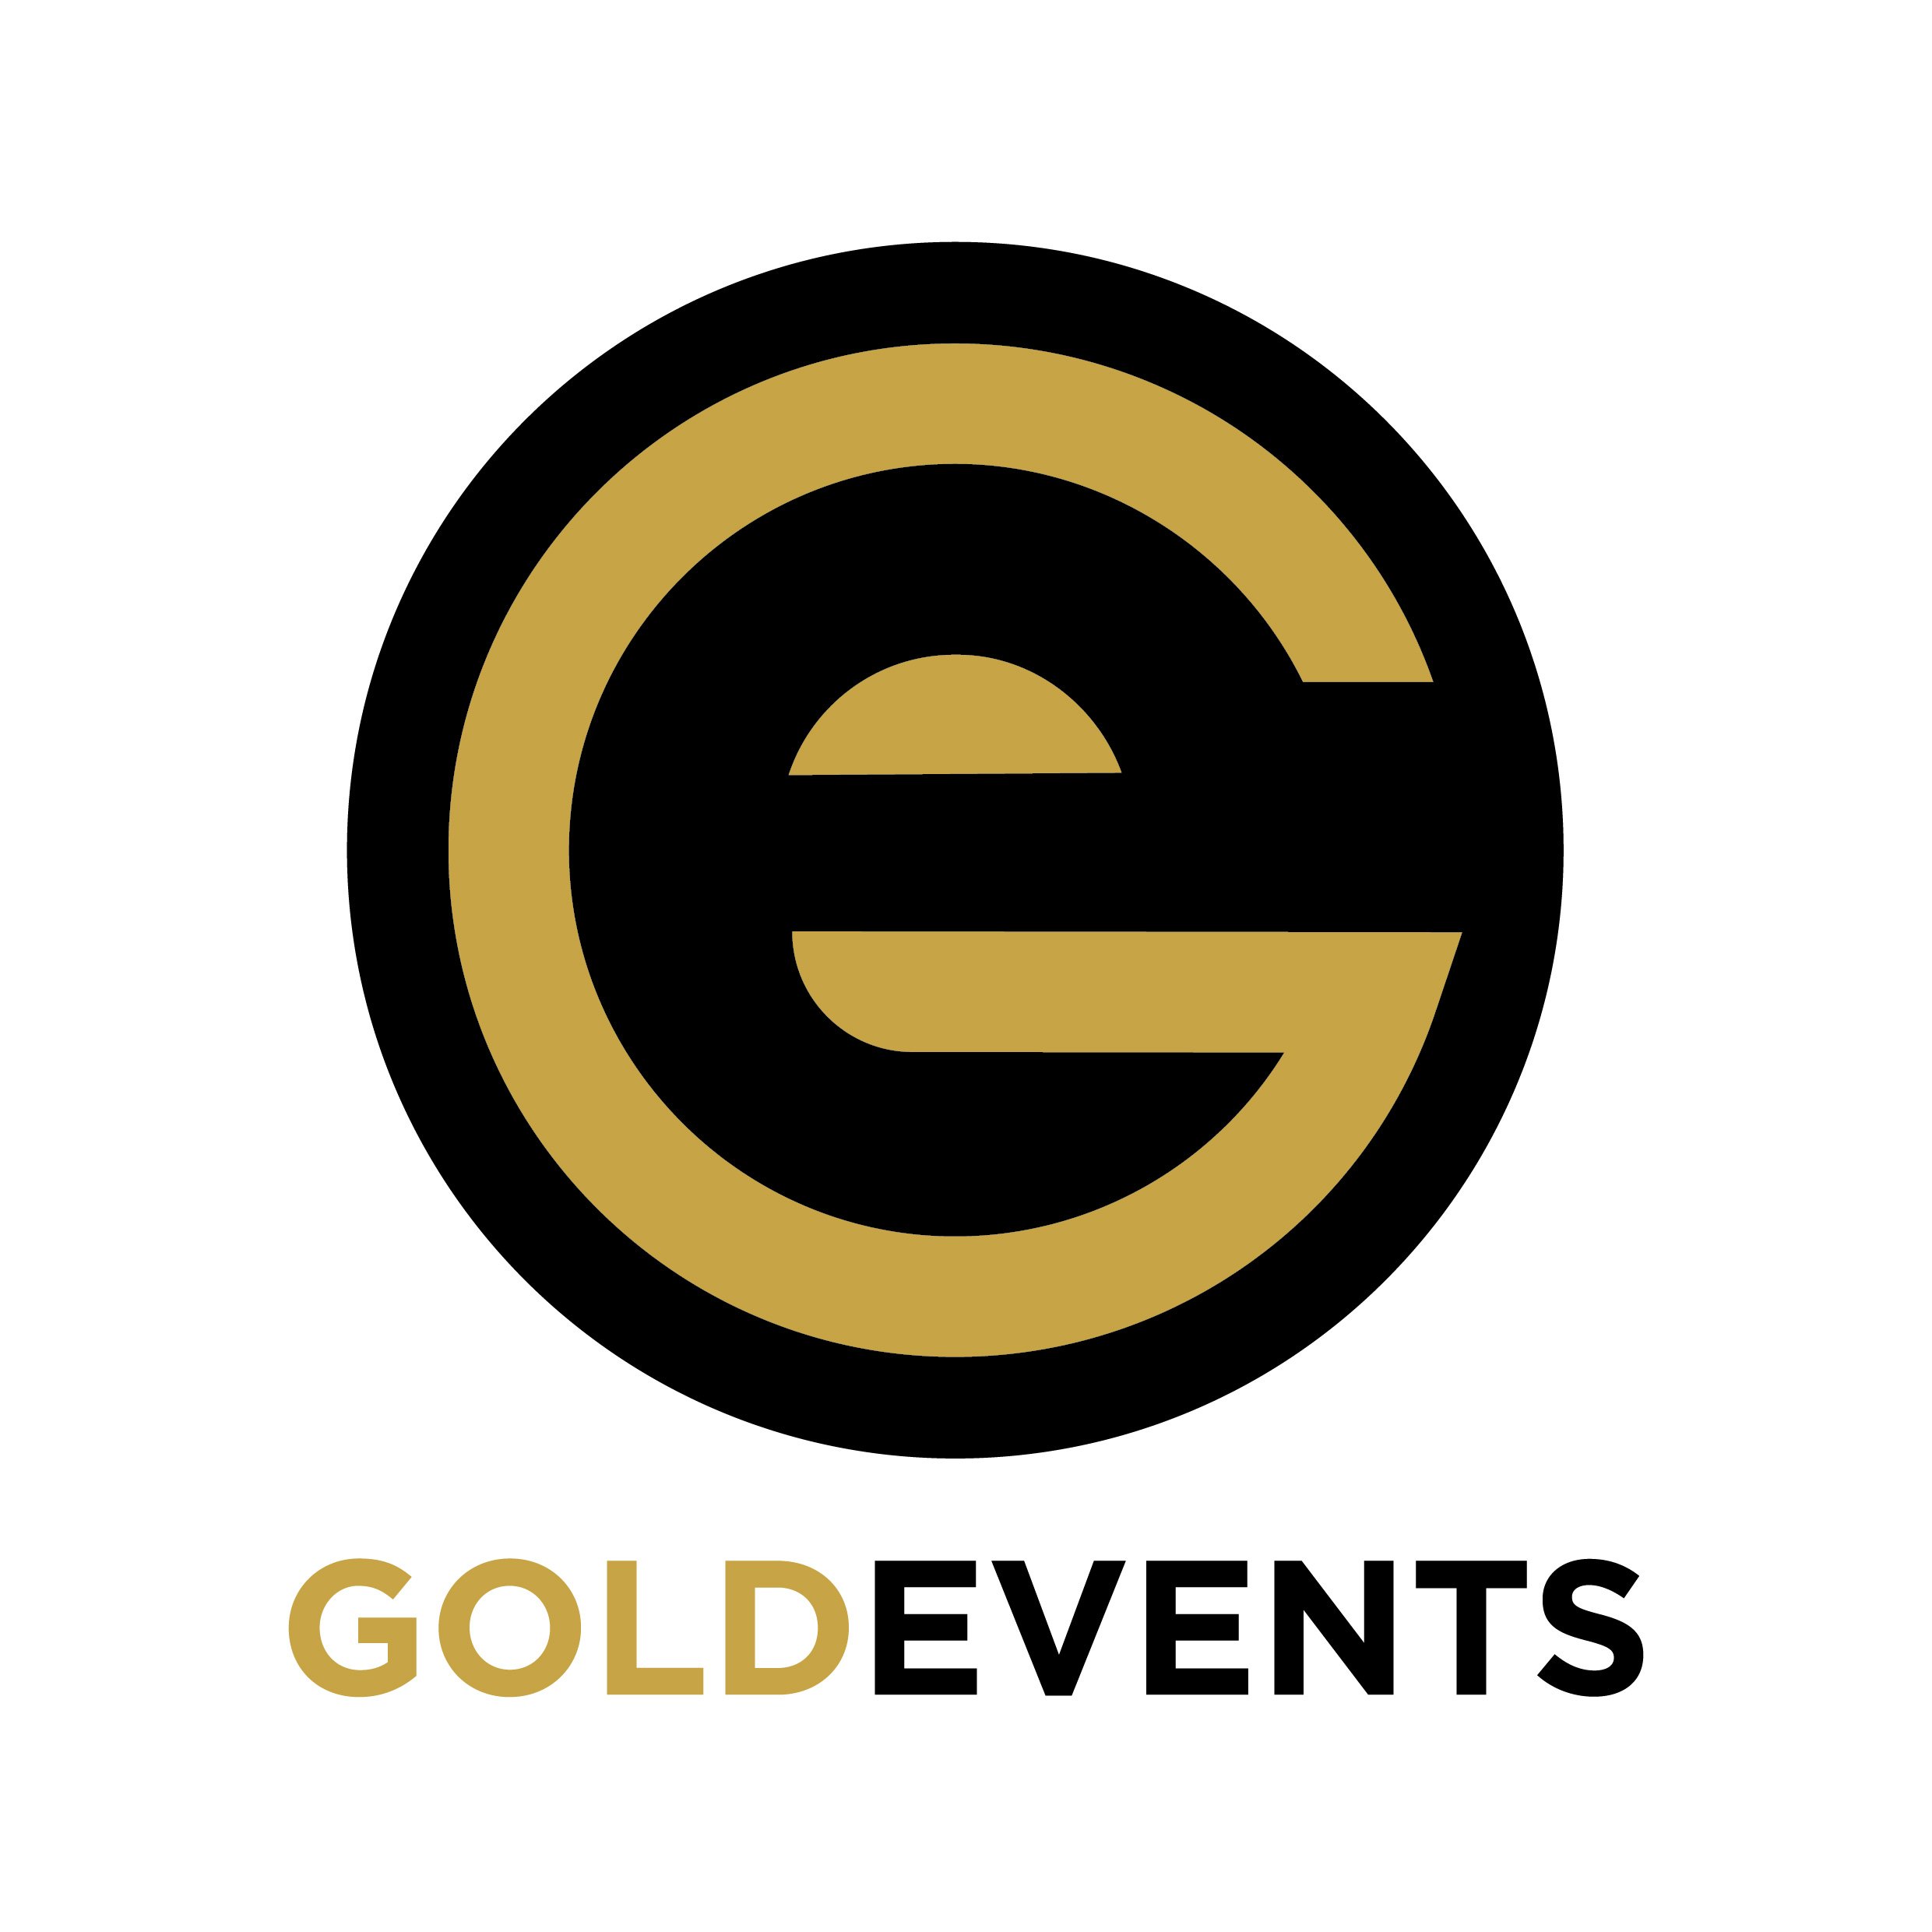 Gold Events Logo.jpg